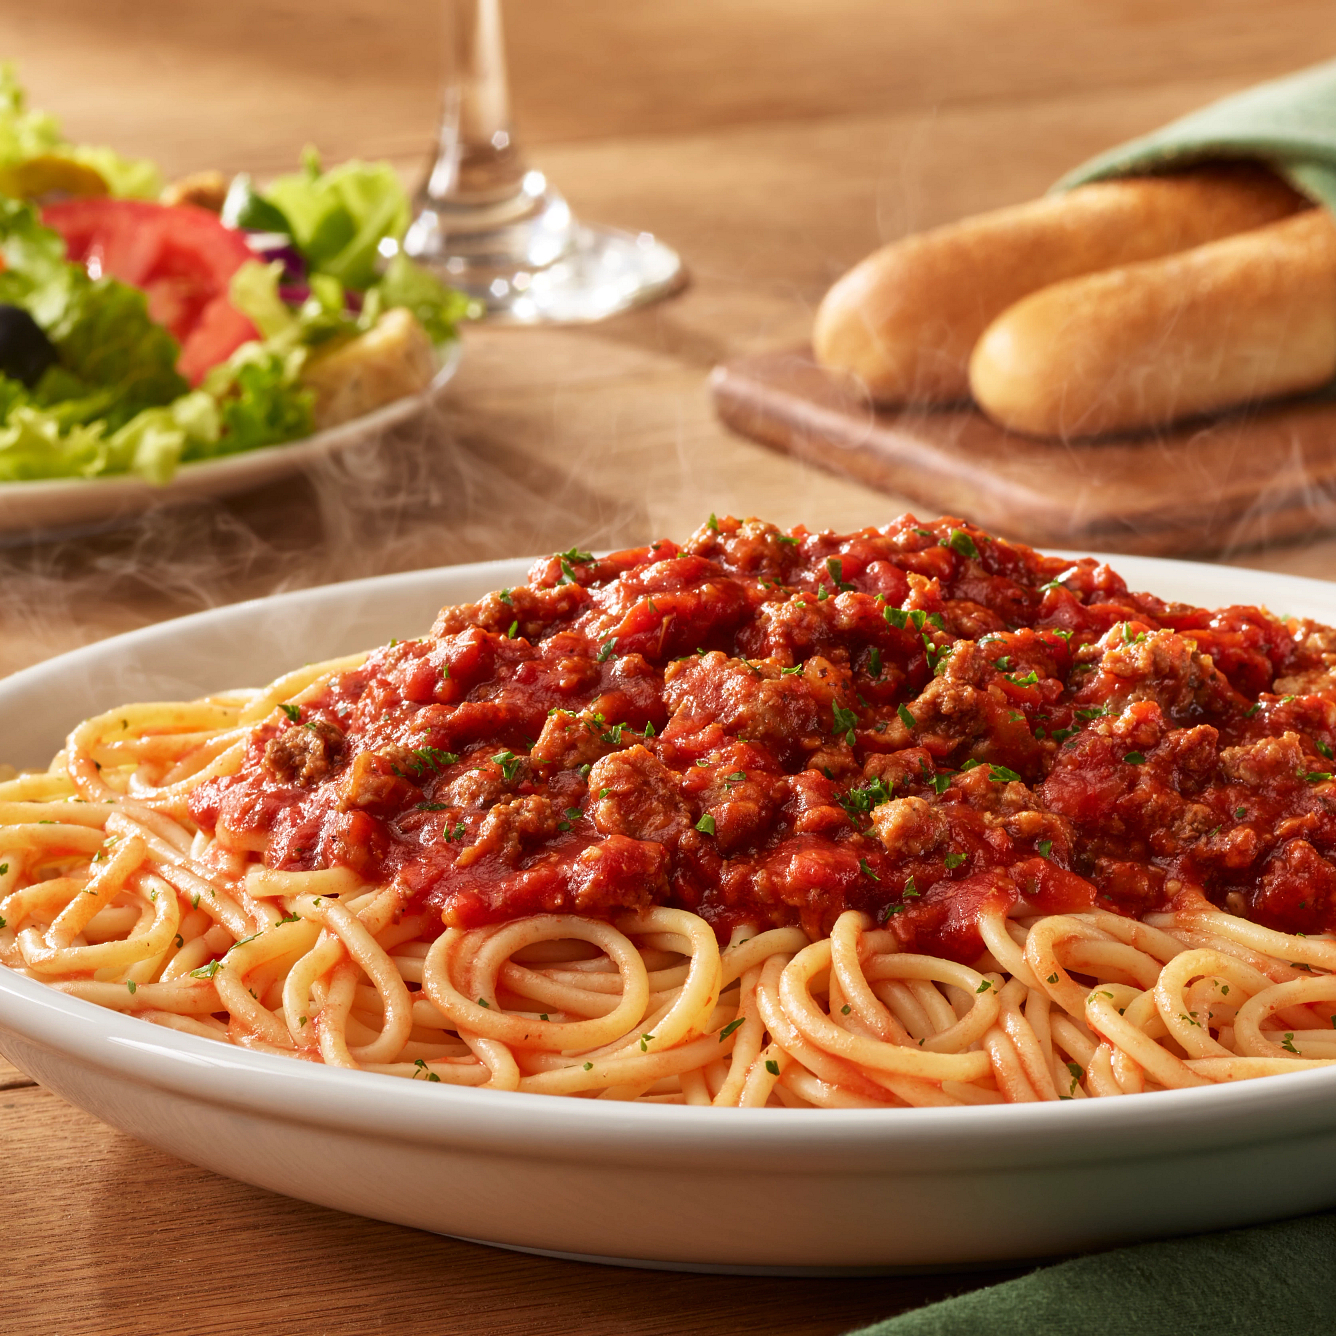 Spaghetti: Topped with your choice of homemade marinara or meat sauce prepared fresh daily. Olive Garden Italian Restaurant Savannah (912)961-9009